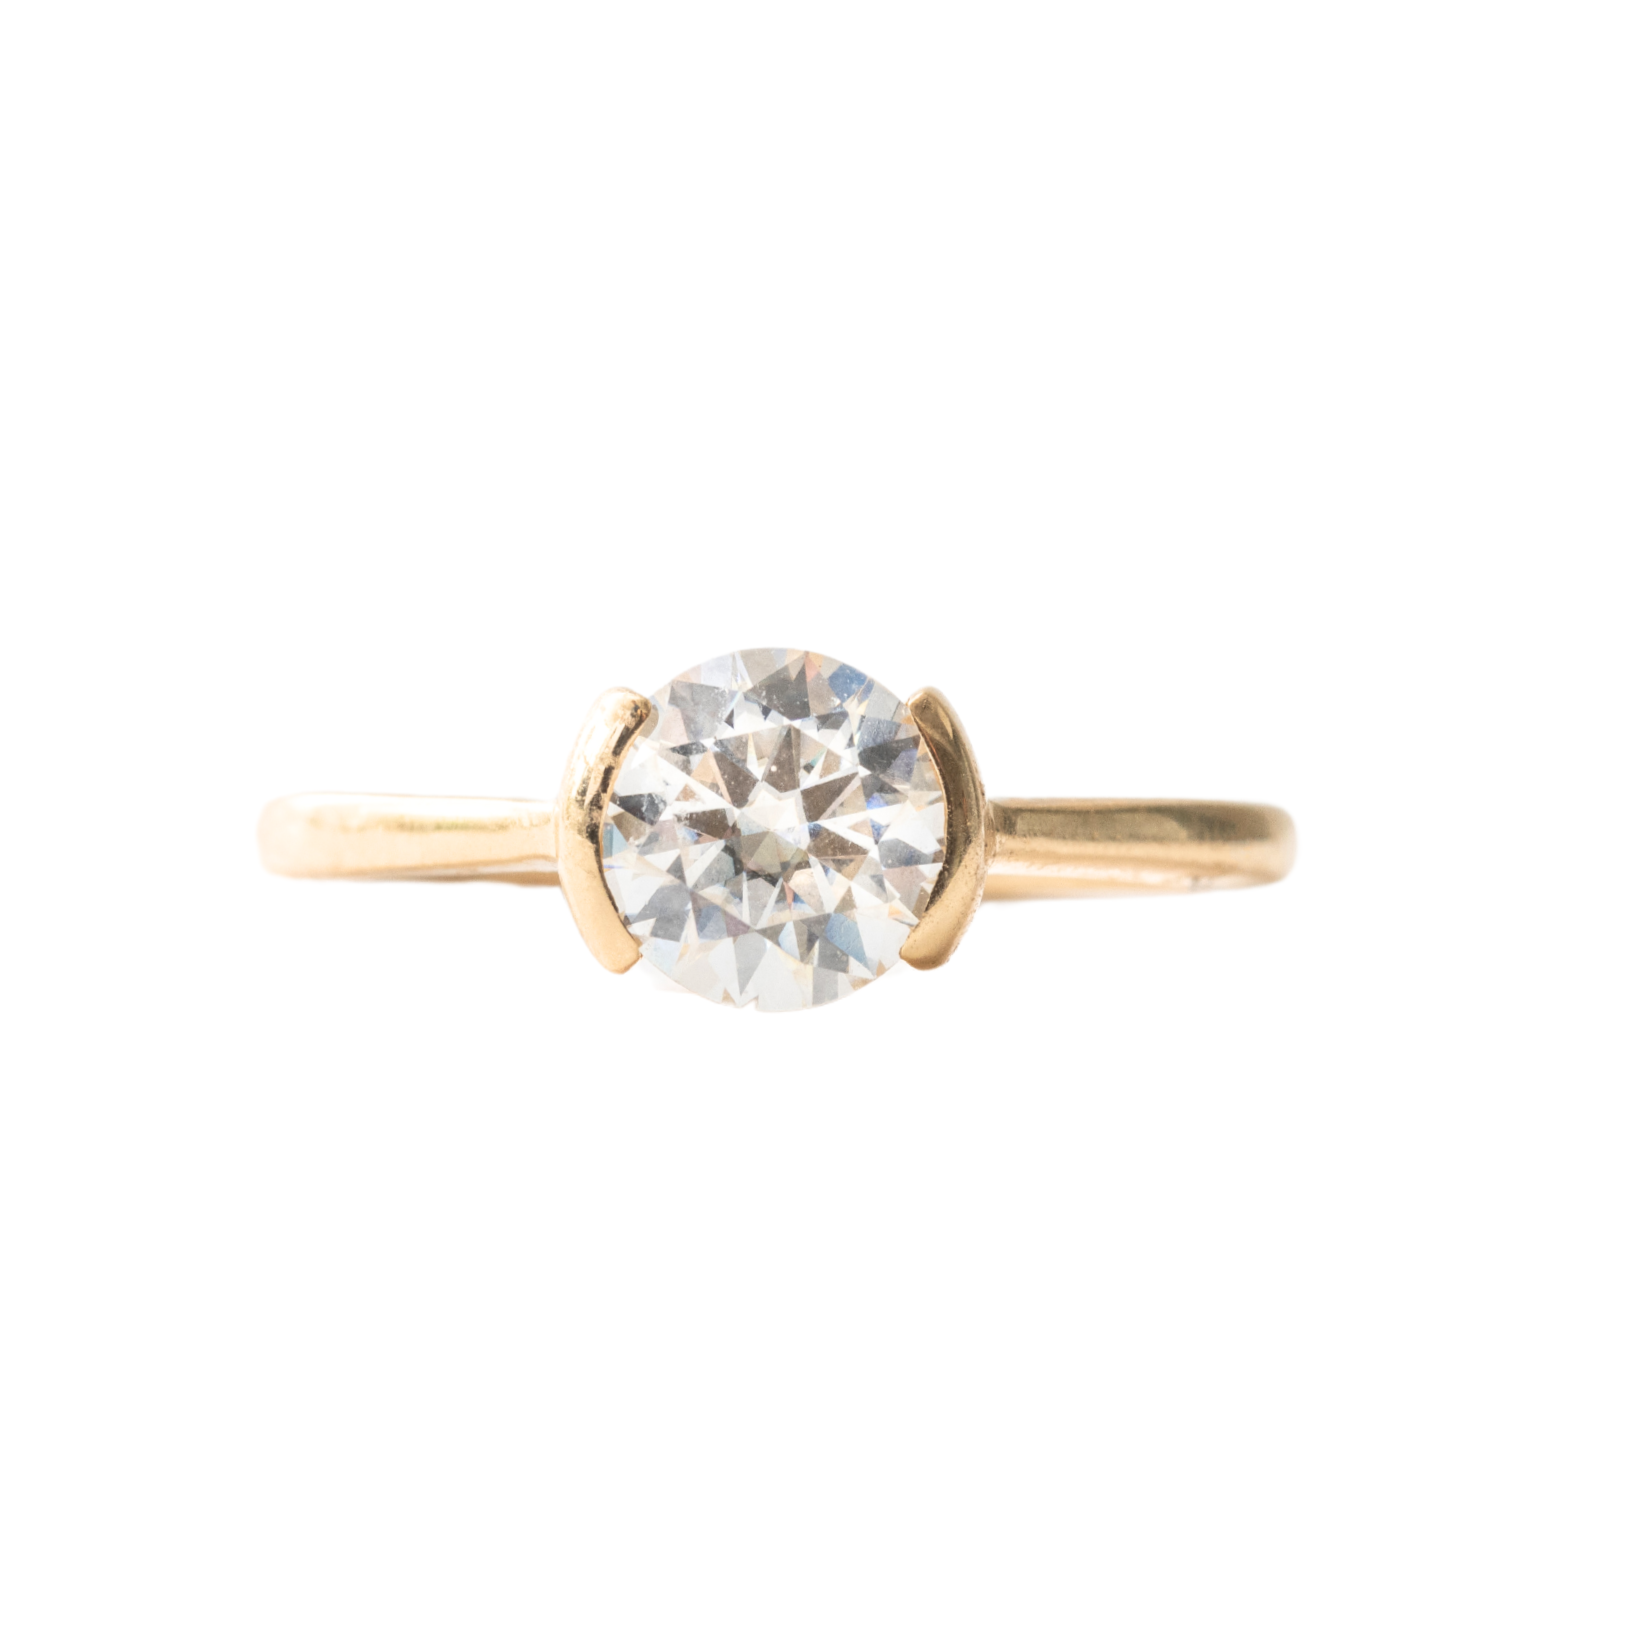 A half bezel ring design featuring a 1 carat diamond 